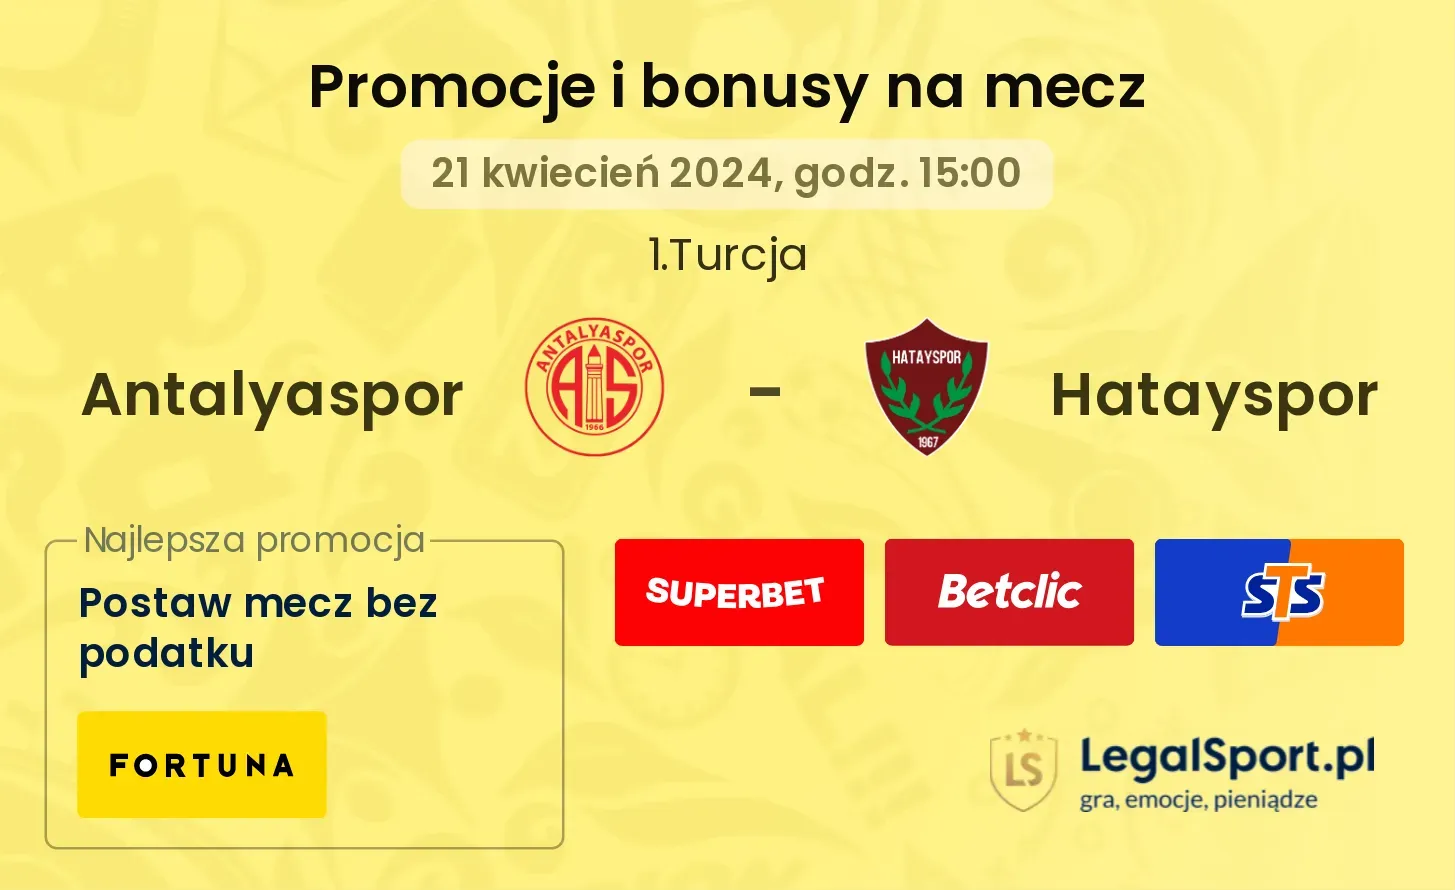 Antalyaspor - Hatayspor promocje bonusy na mecz